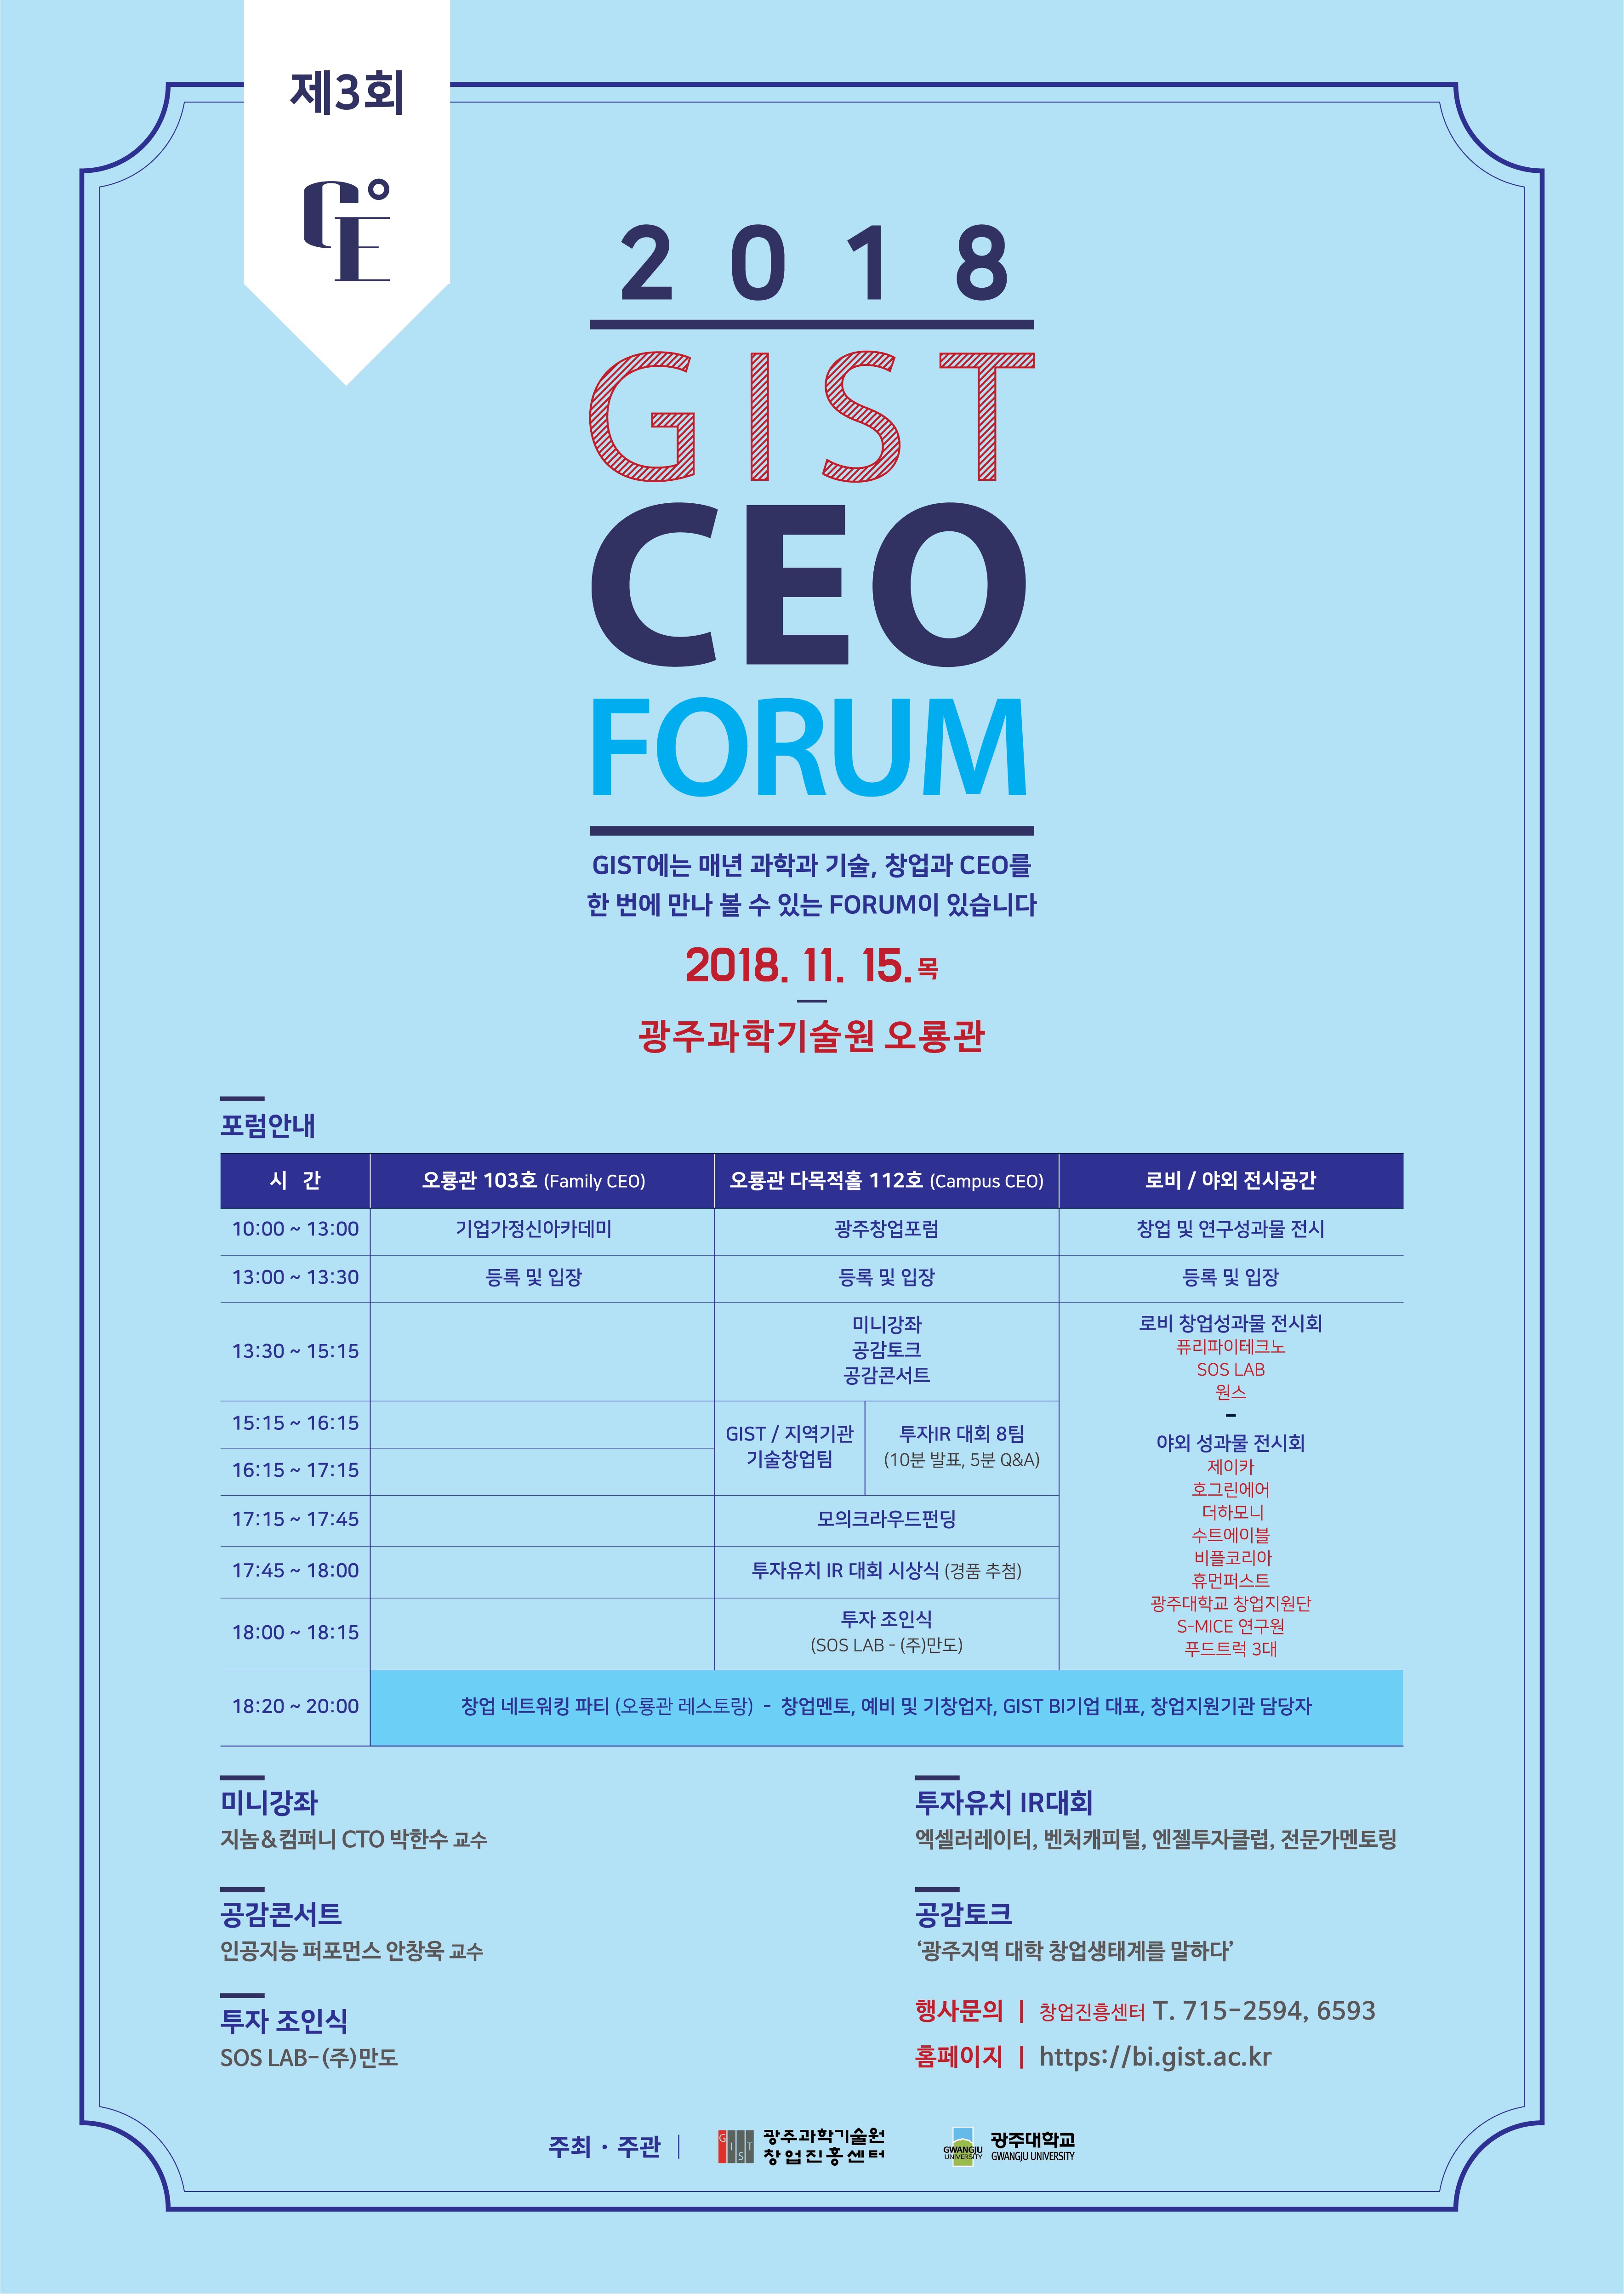 [25th Anniversary Celebration] GIST hosts 3rd CEO Forum 이미지